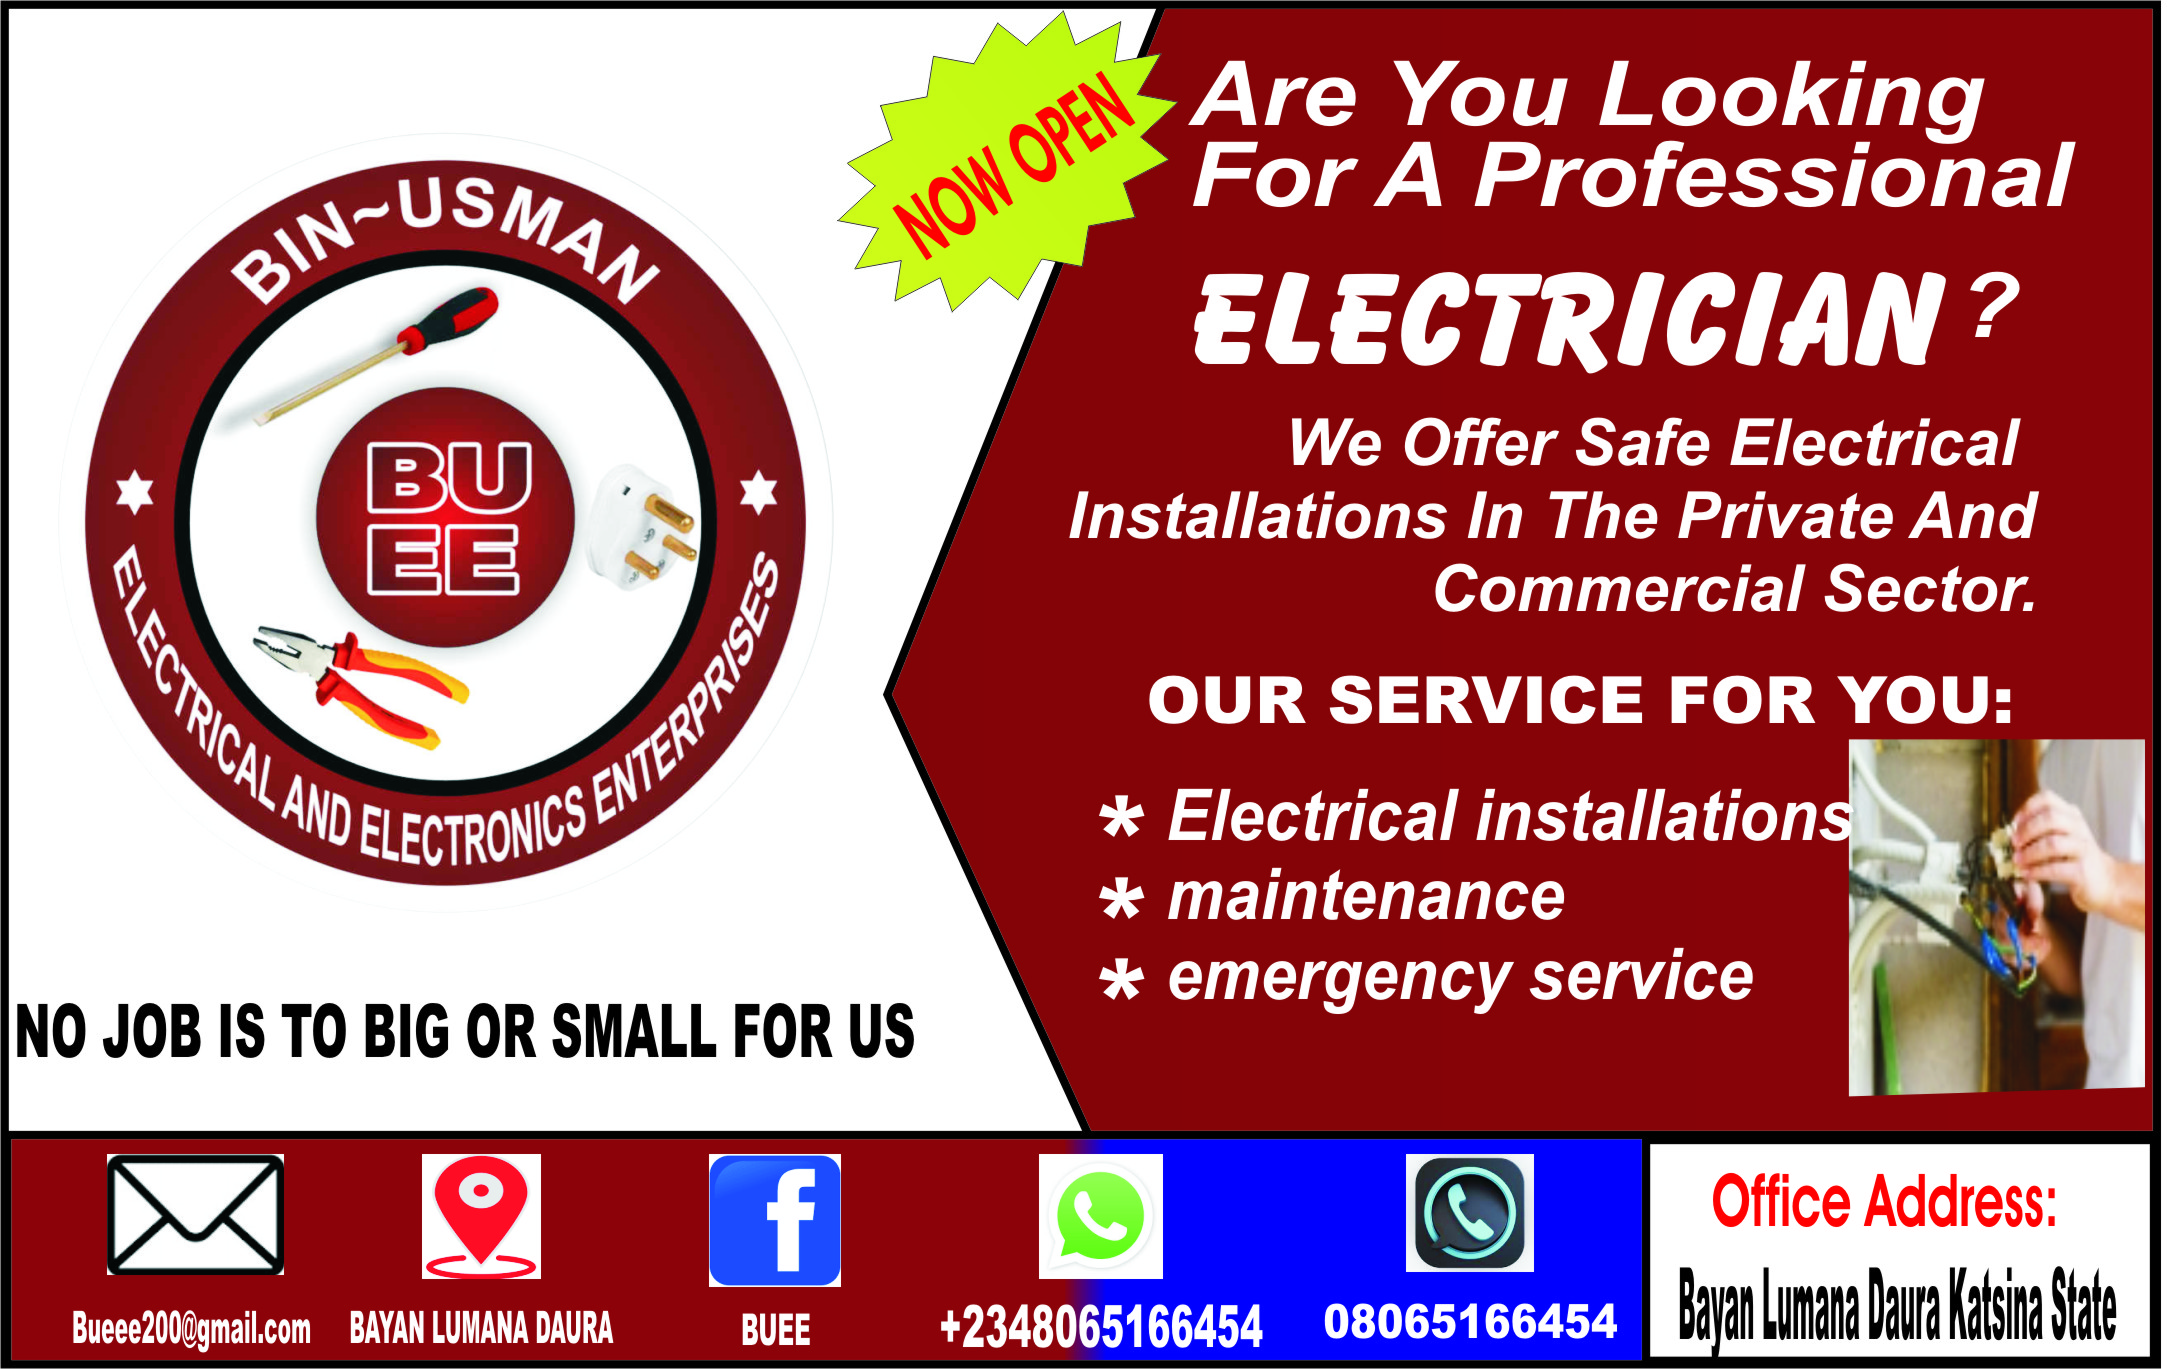 bin usman electrical and electronics enterprises.